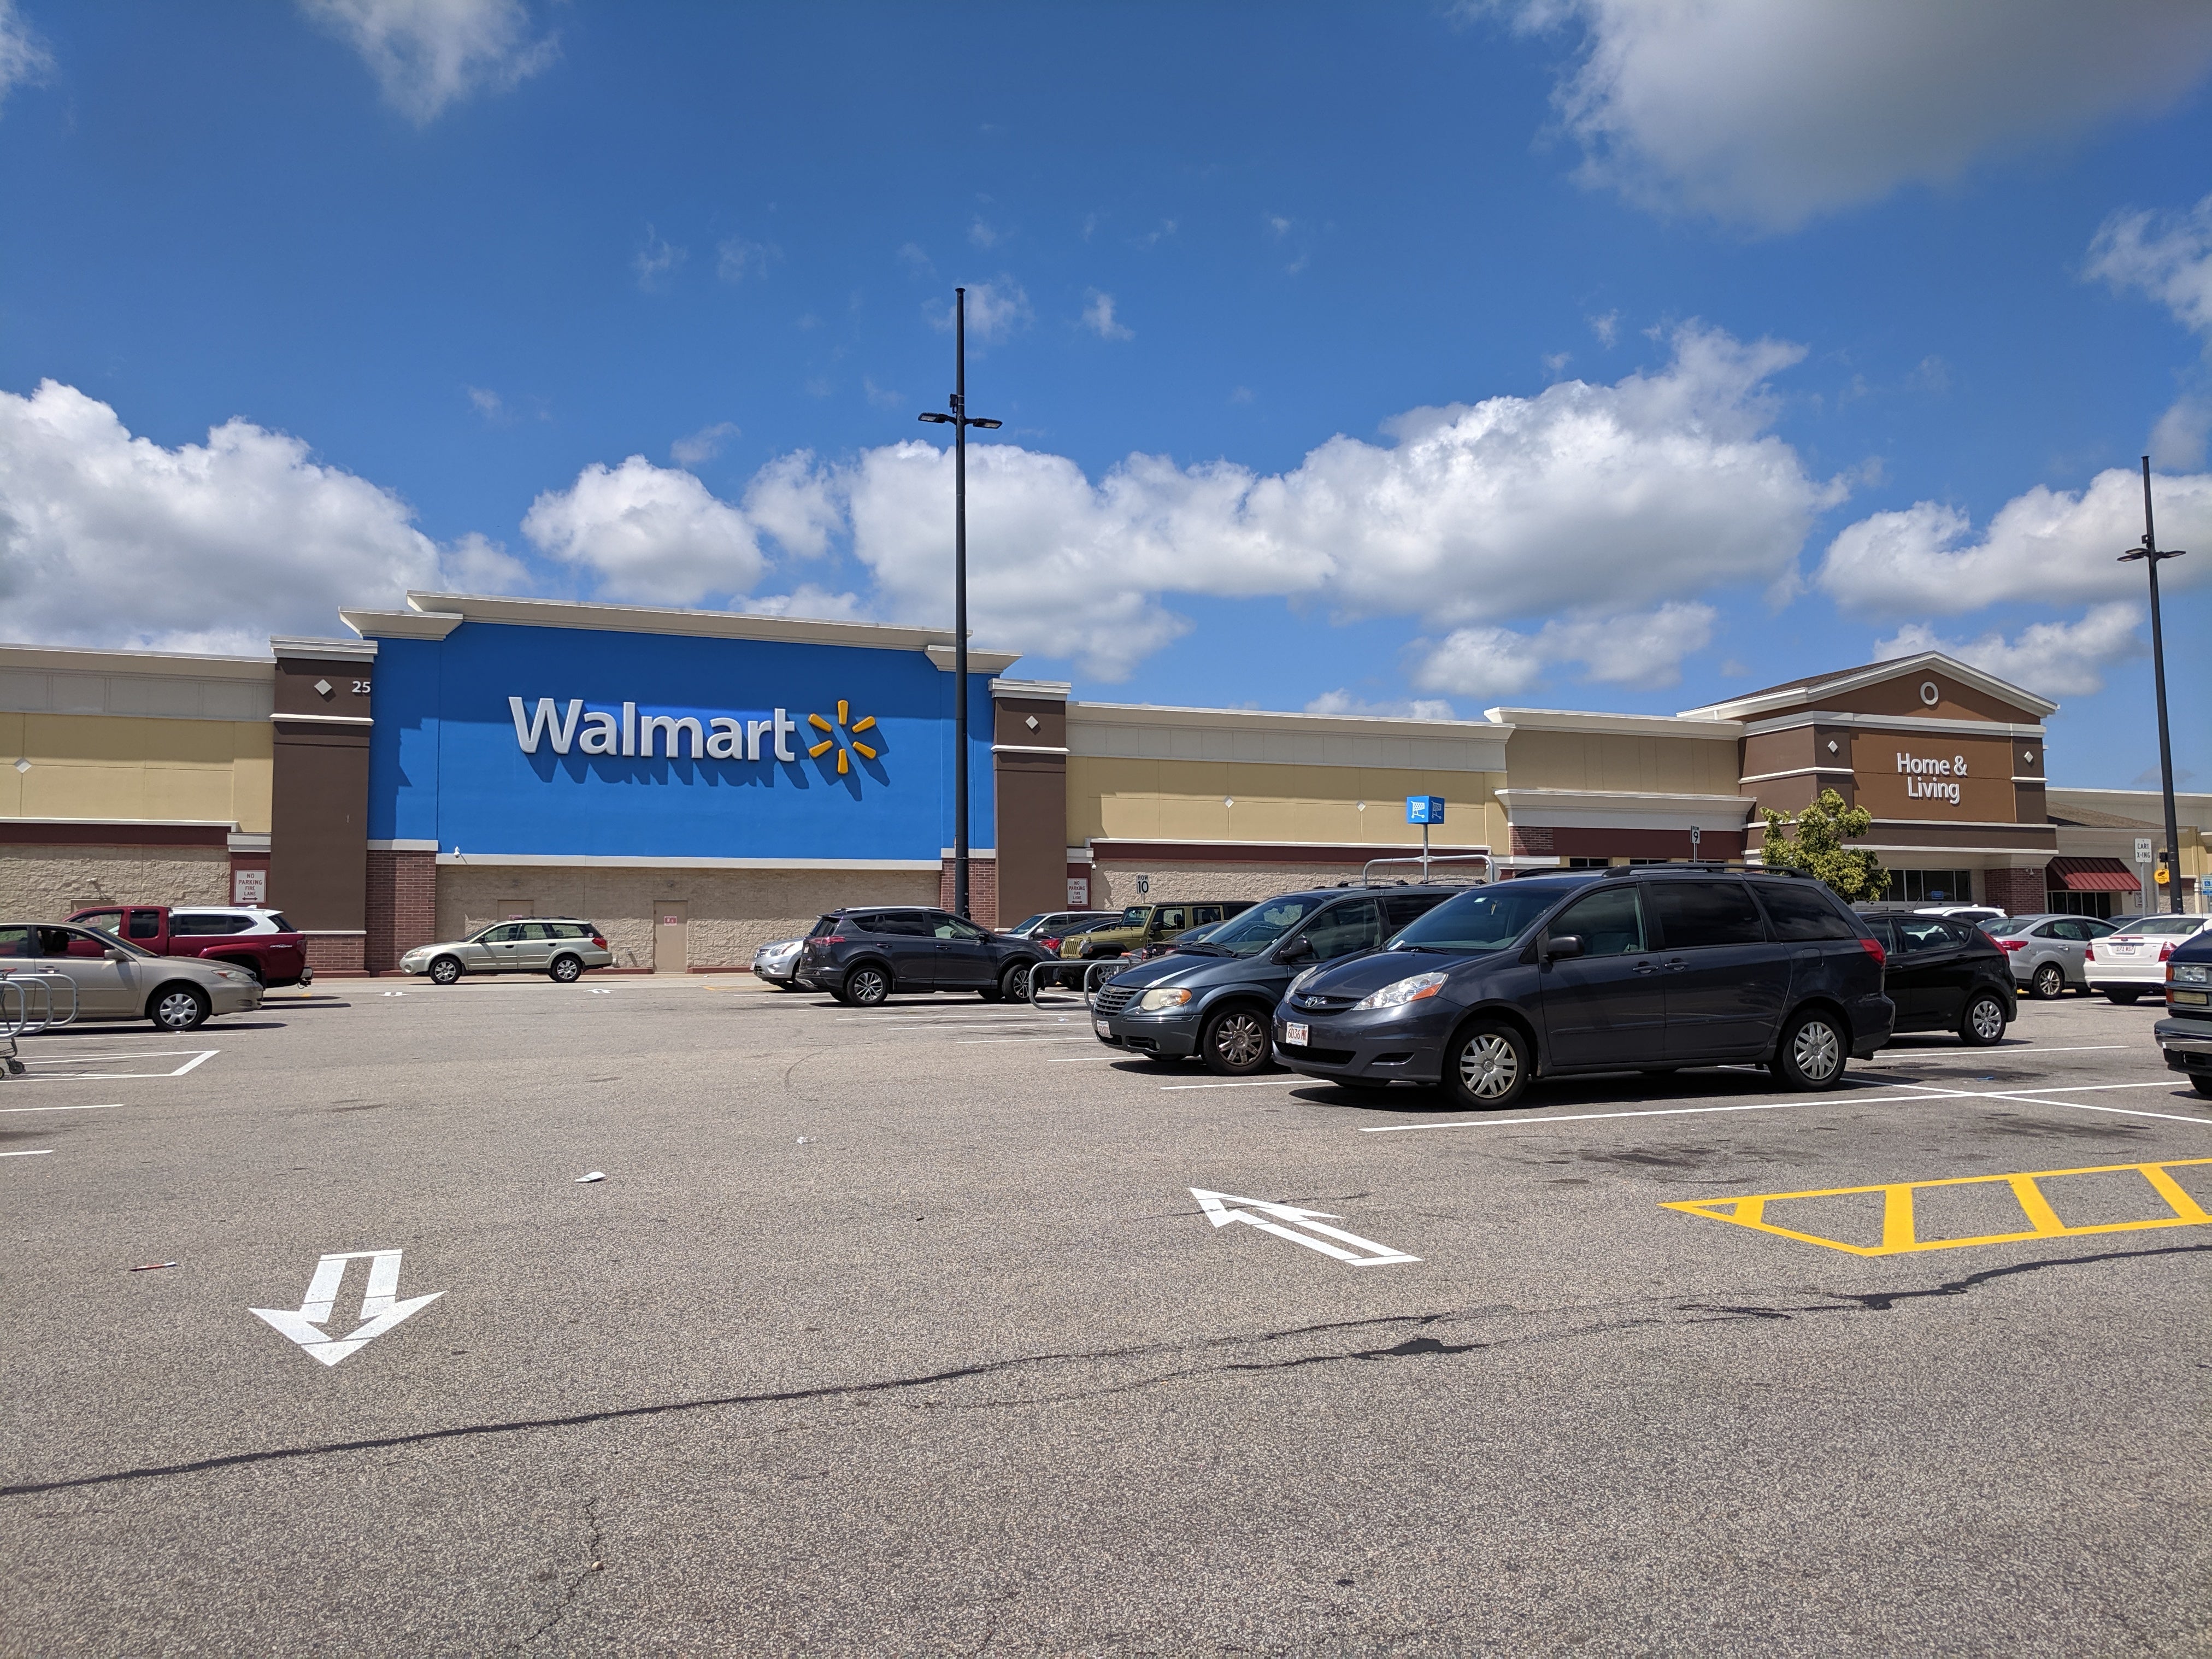 81 Walmart employees at Massachusetts store test positive for coronavirus